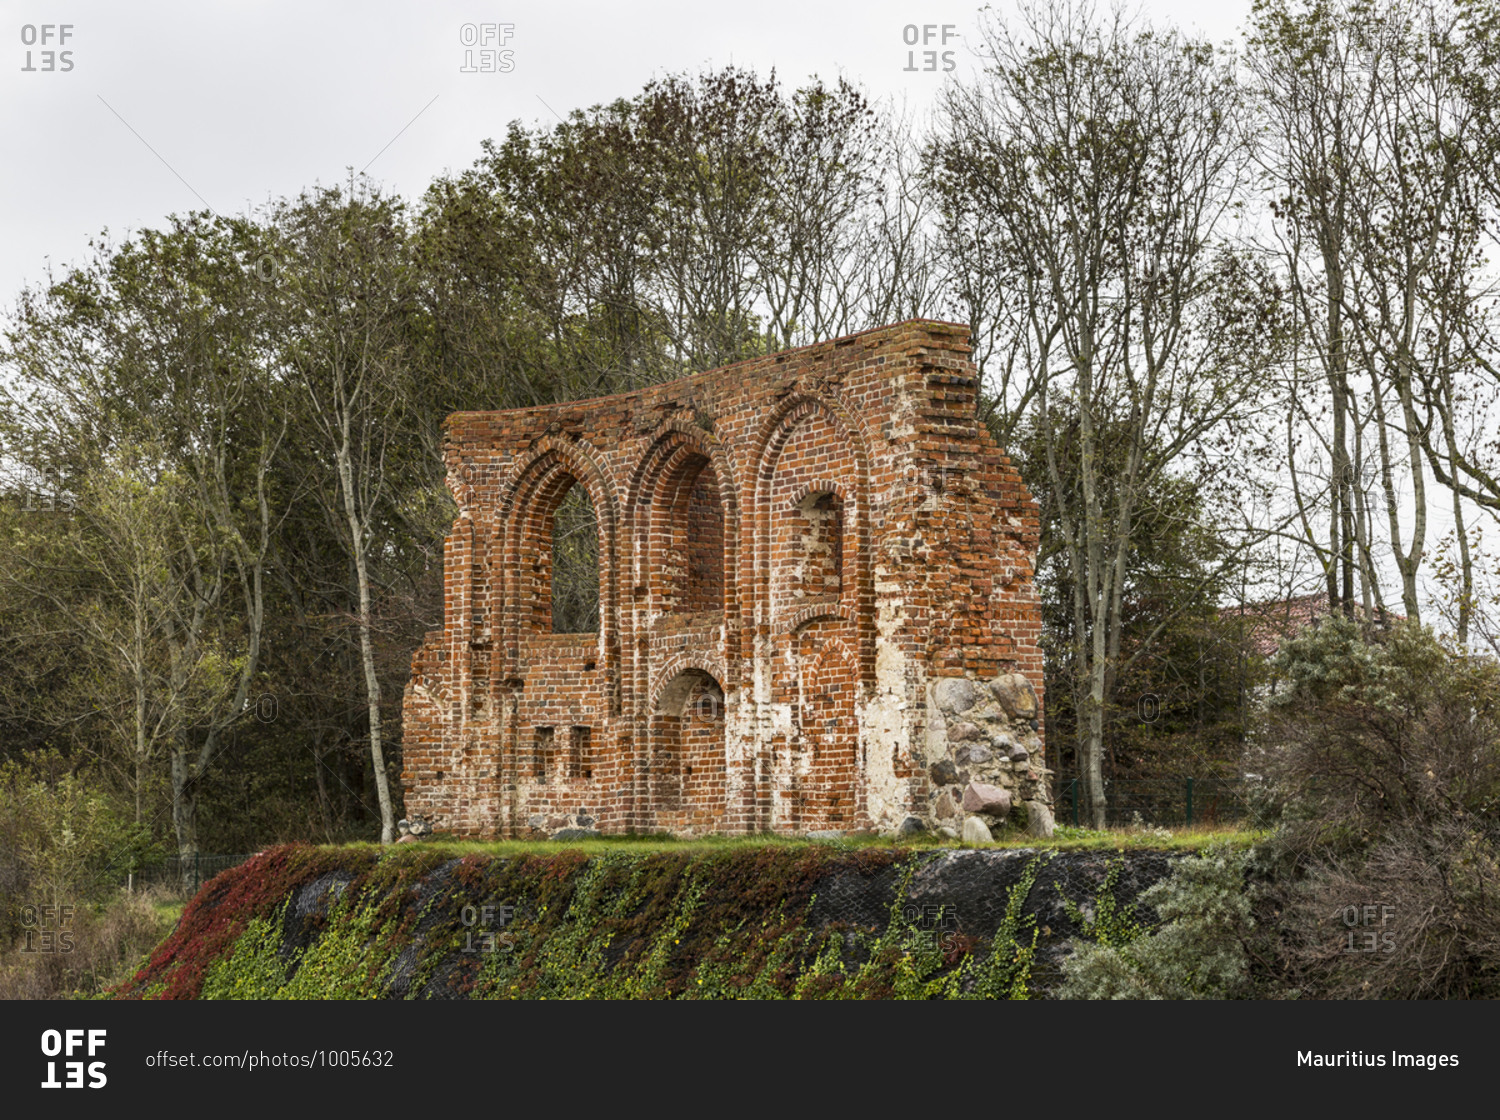 Europe, Poland, West Pomeranian Voivodeship, Ruins of the church in Trzesacz, Hoff an der Ostsee